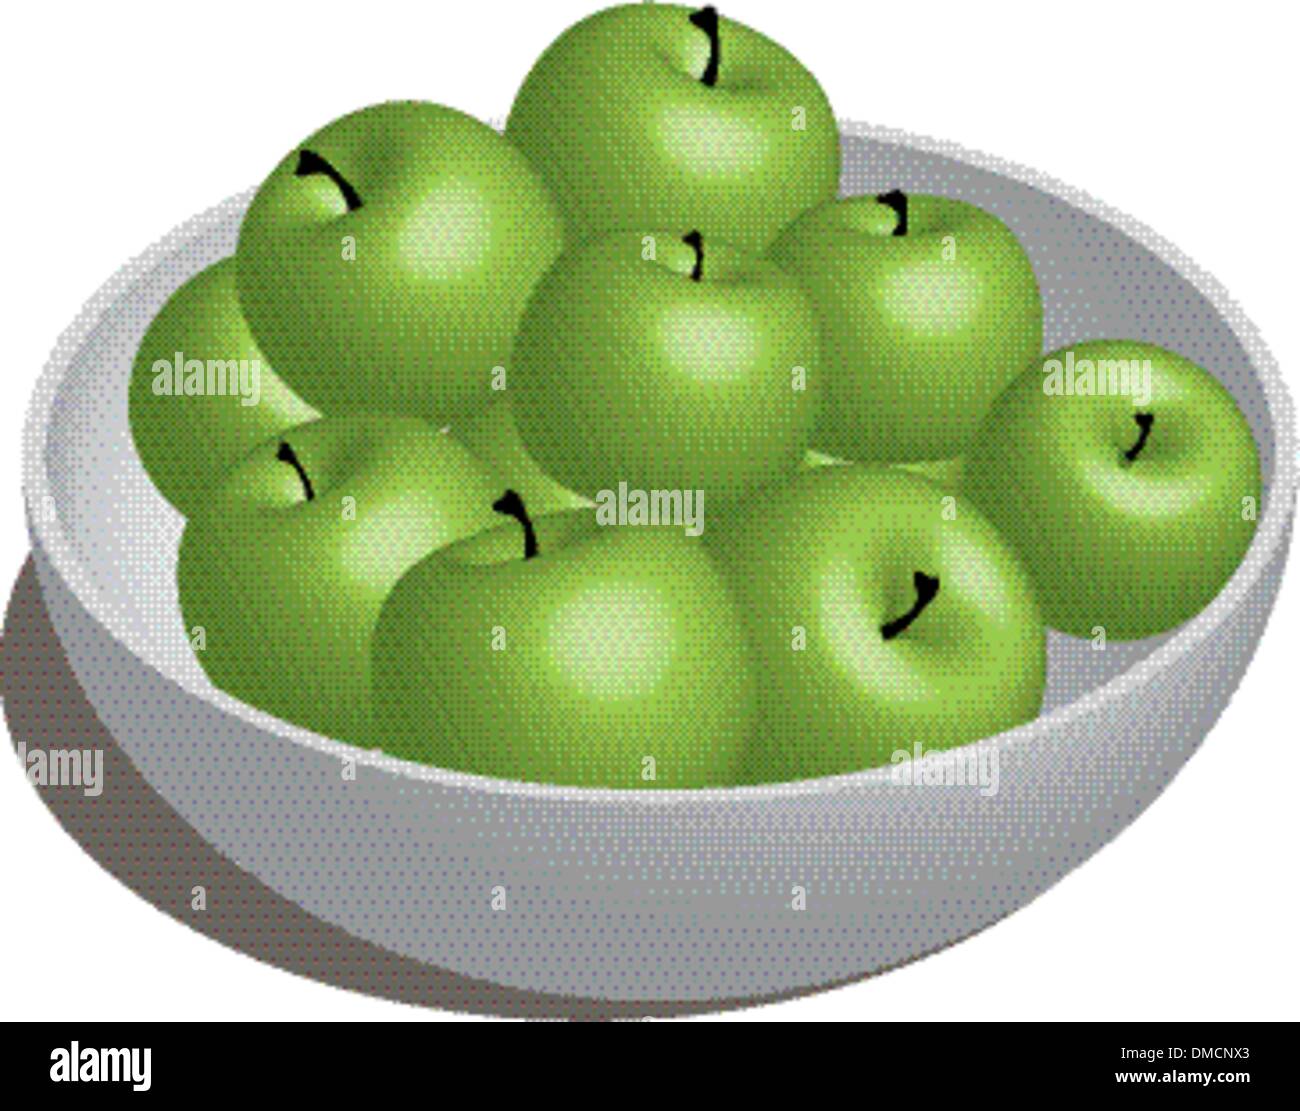 Bowl of Green Apples Bowl of Green Apples Stock Vector Image & Art - Alamy